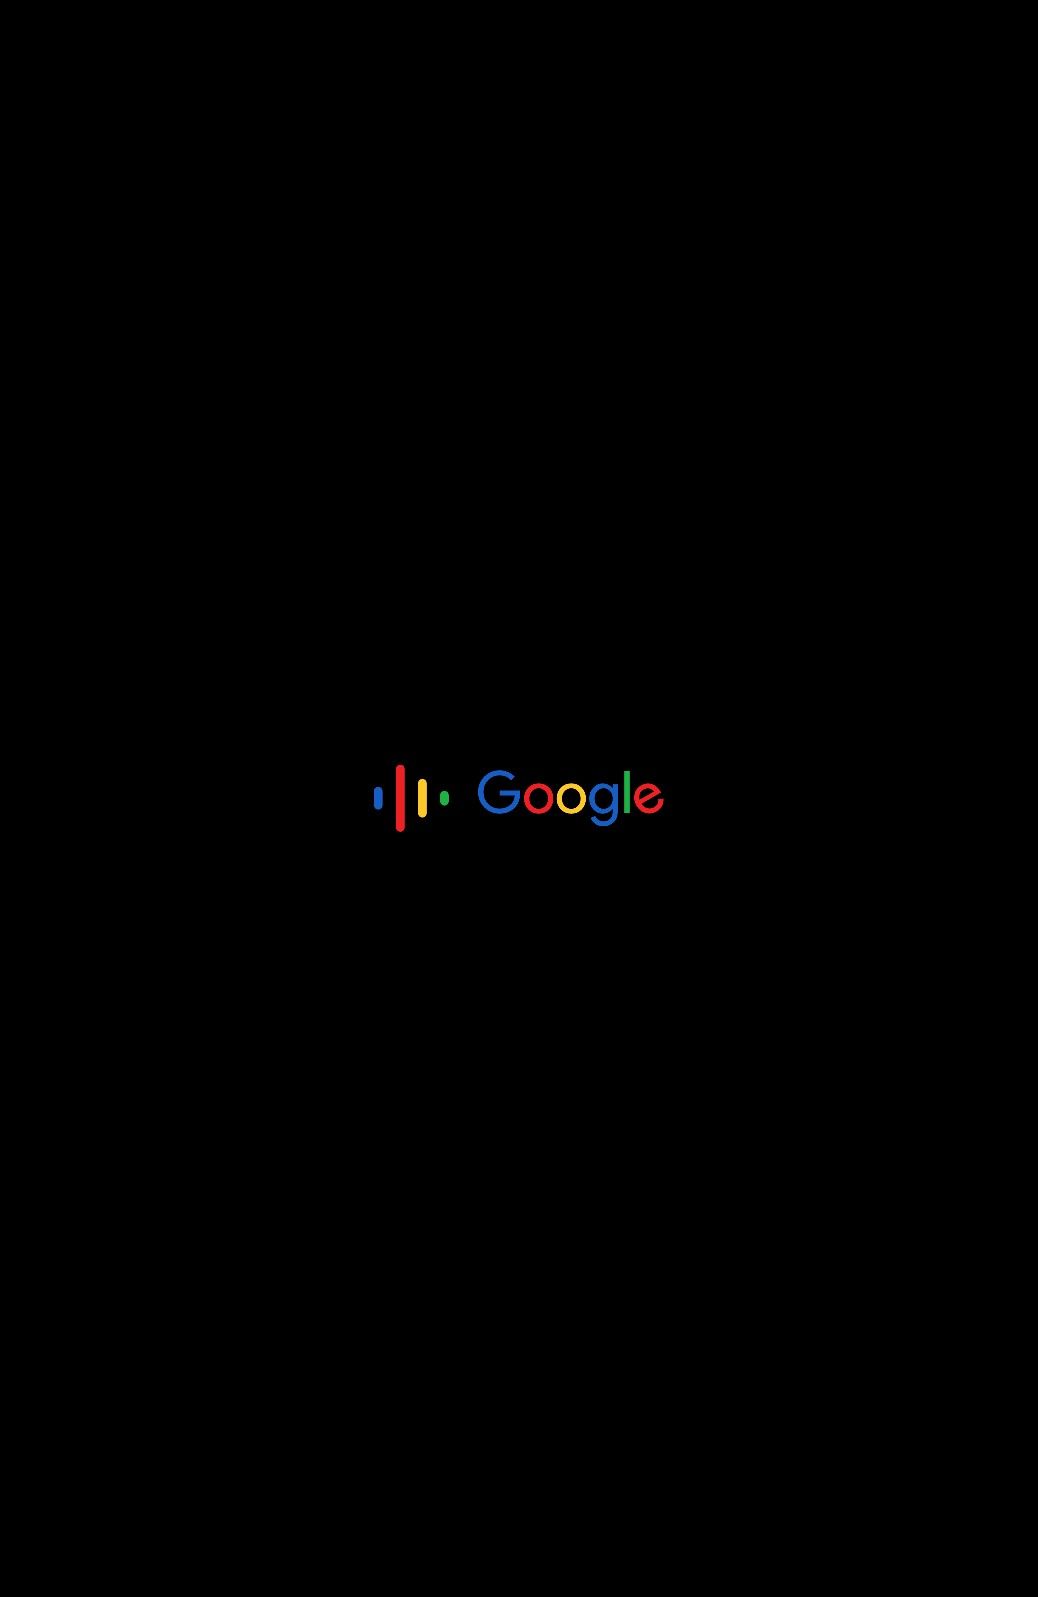 Google. Google pixel wallpaper, iPhone wallpaper photo, Android wallpaper